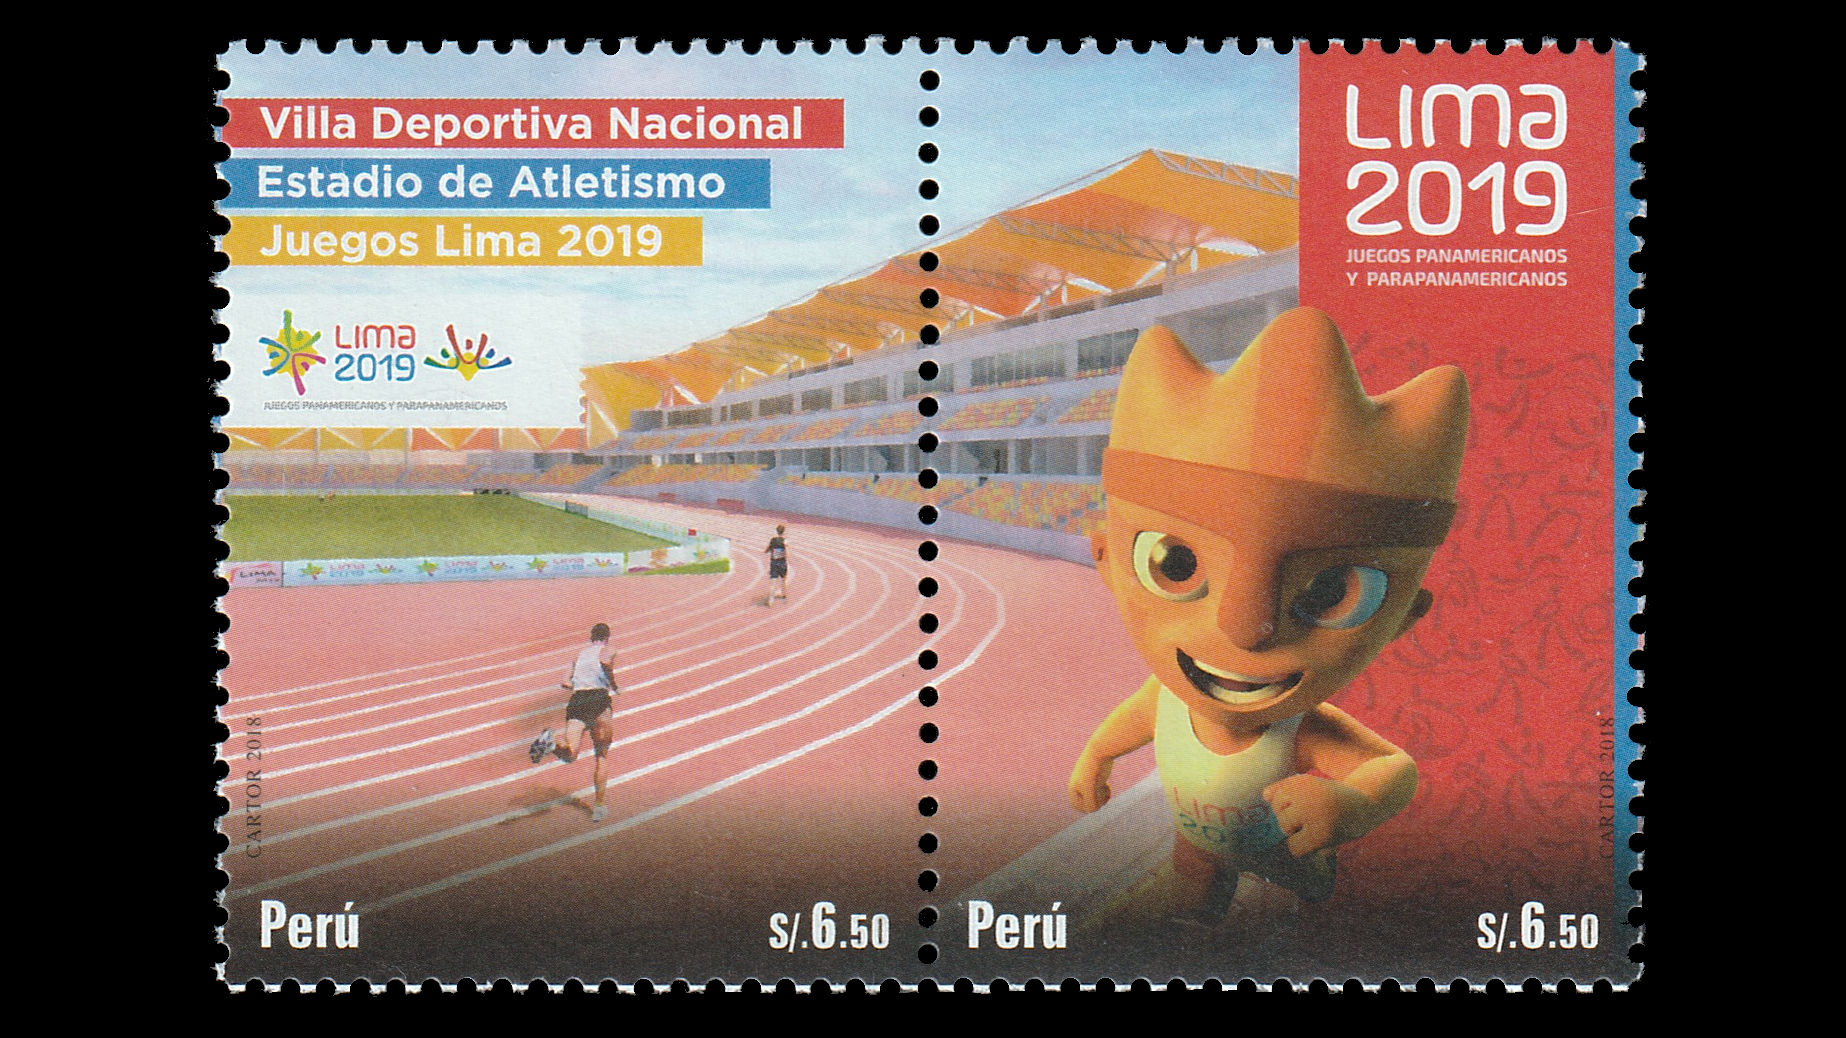 2019 Pan American Games, Lima